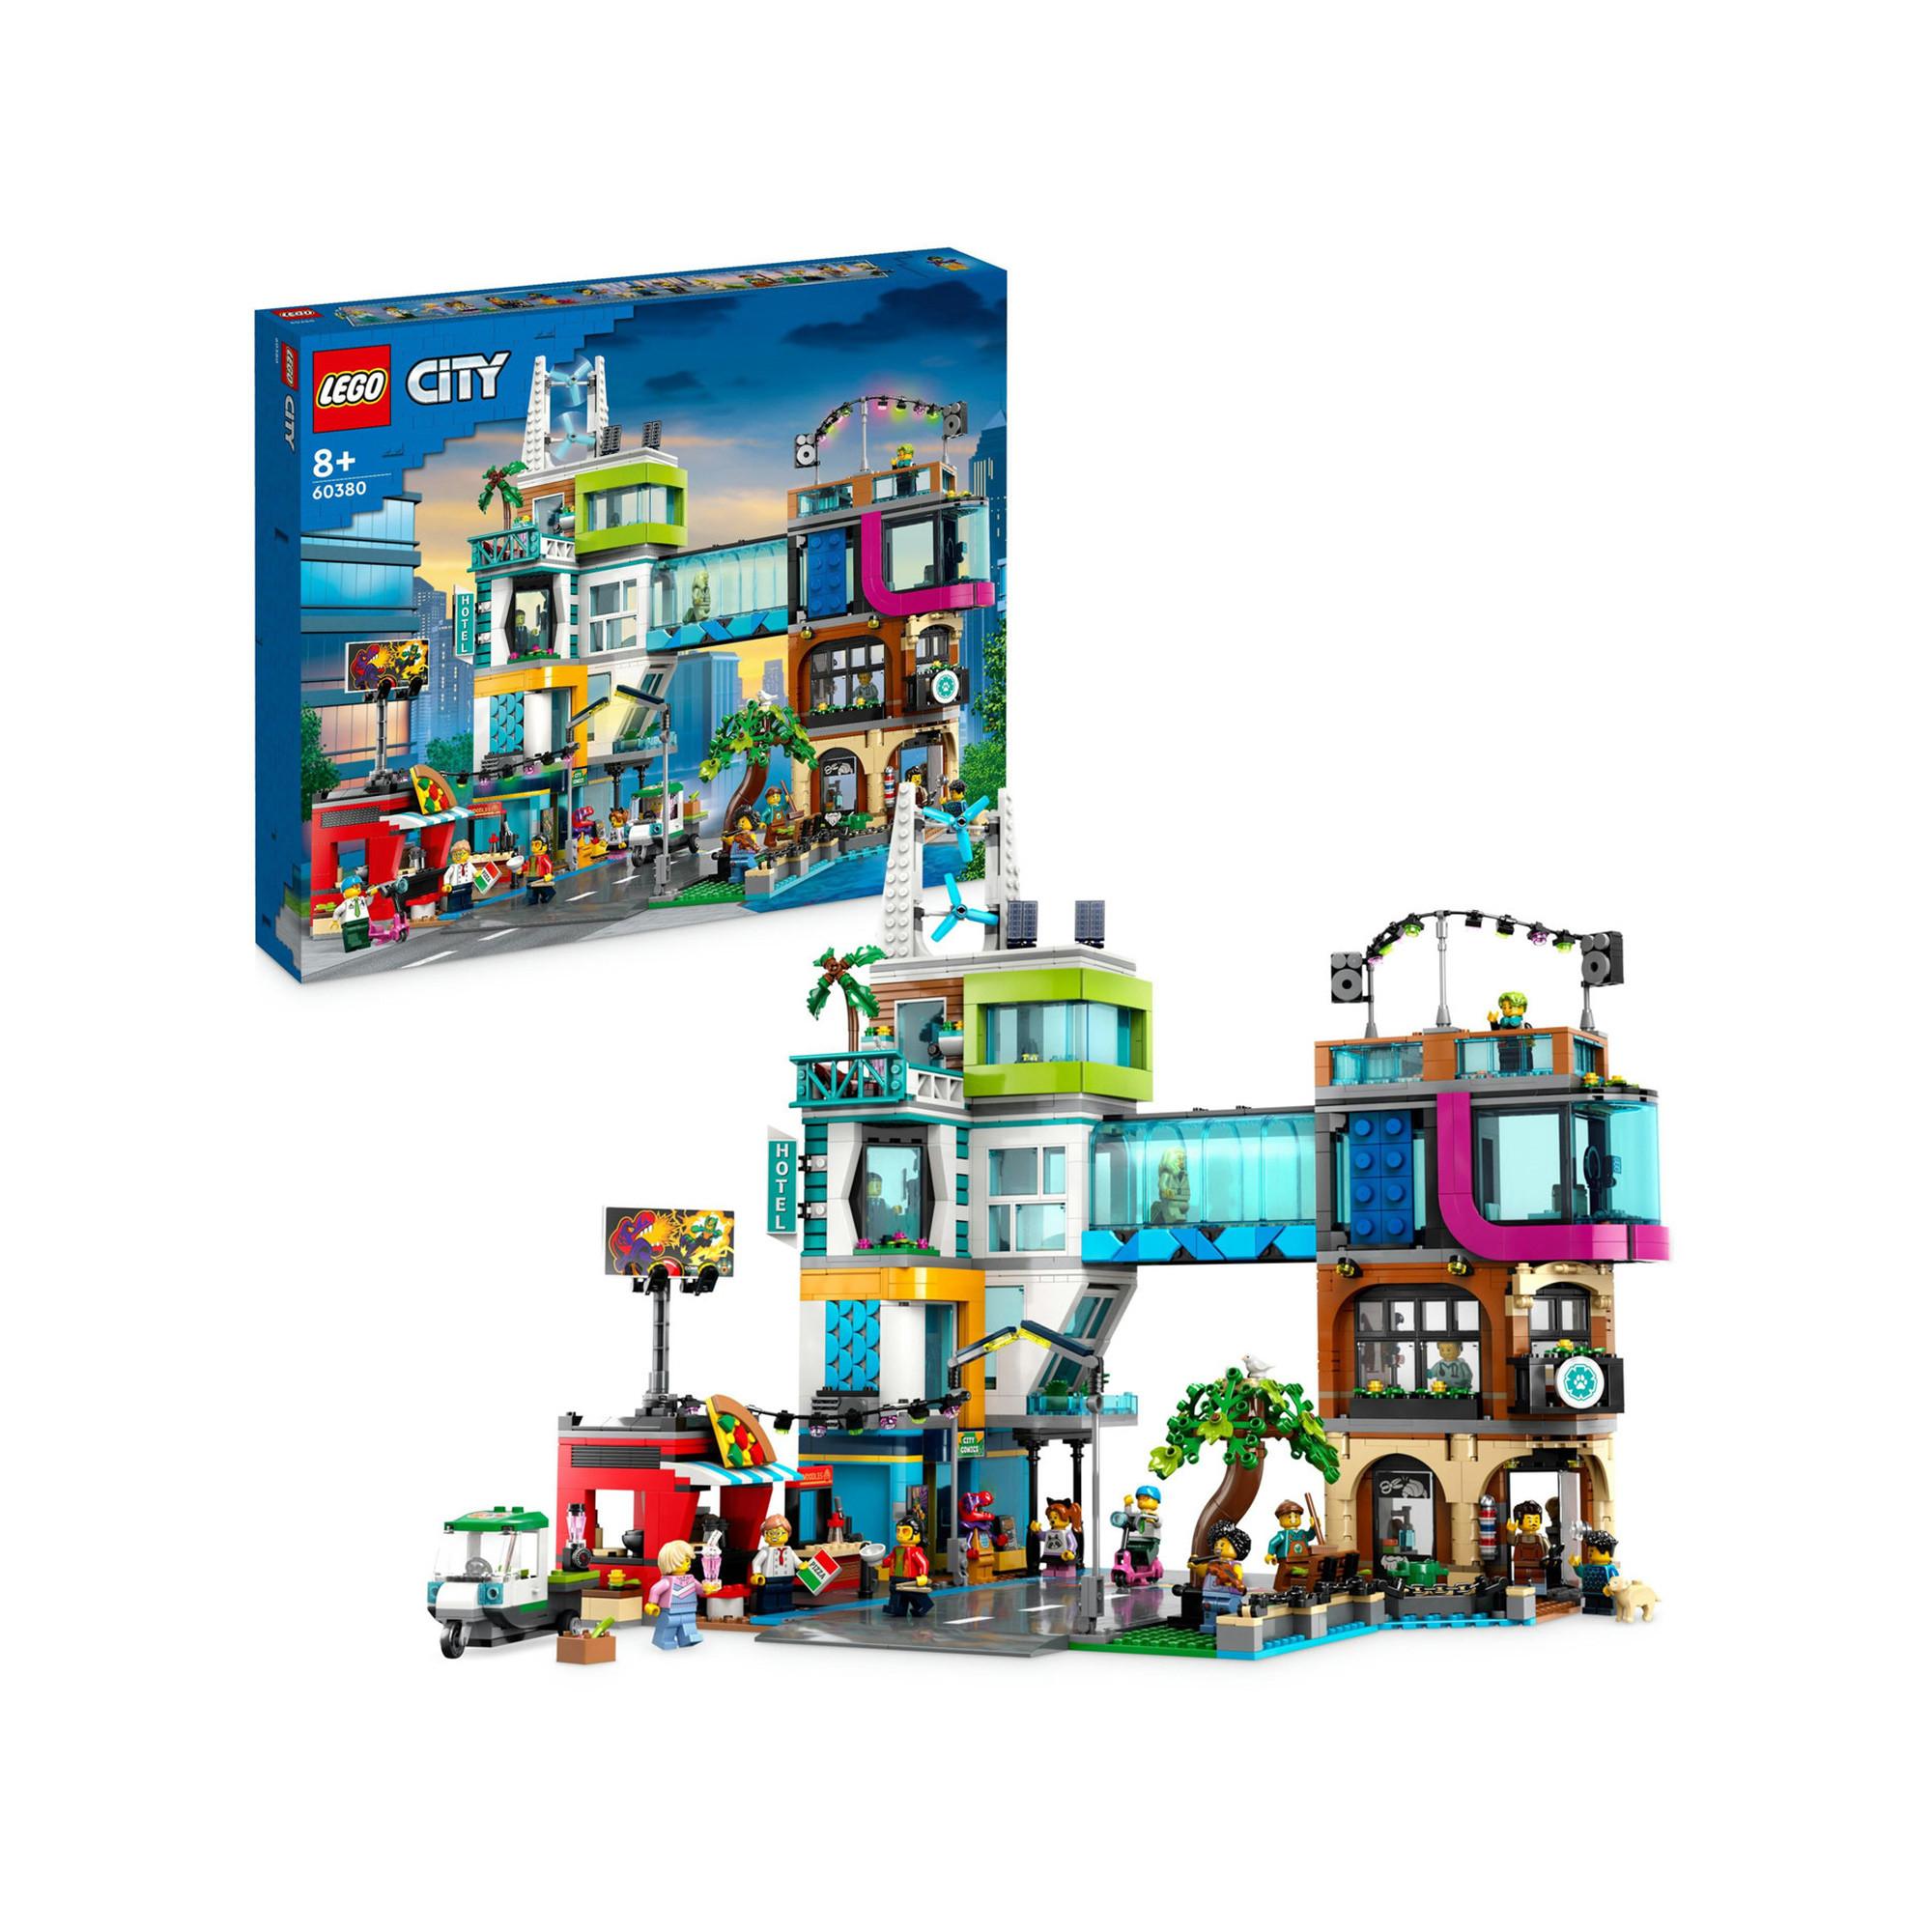 LEGO®  60380 Stadtzentrum 